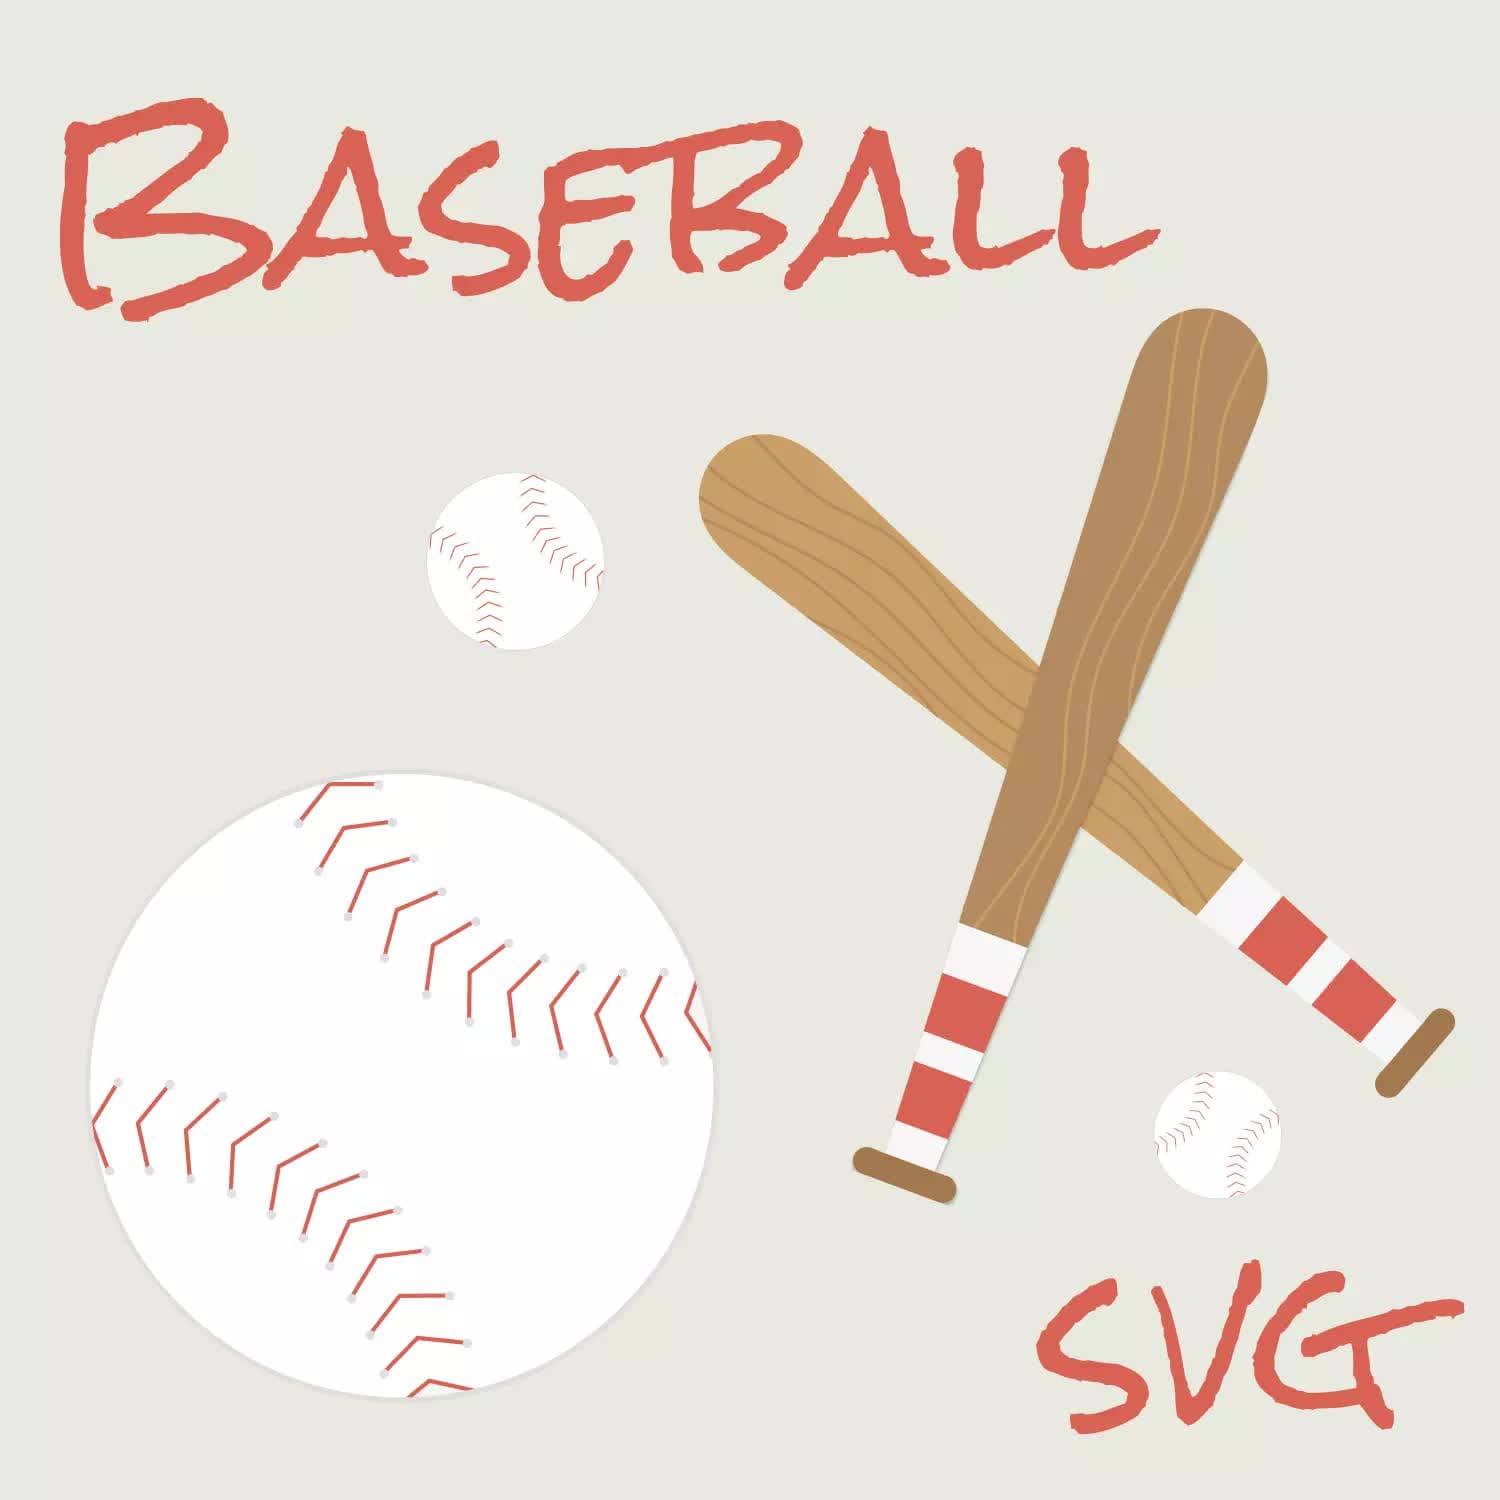 Baseball SVG Sport Files Preview 4.